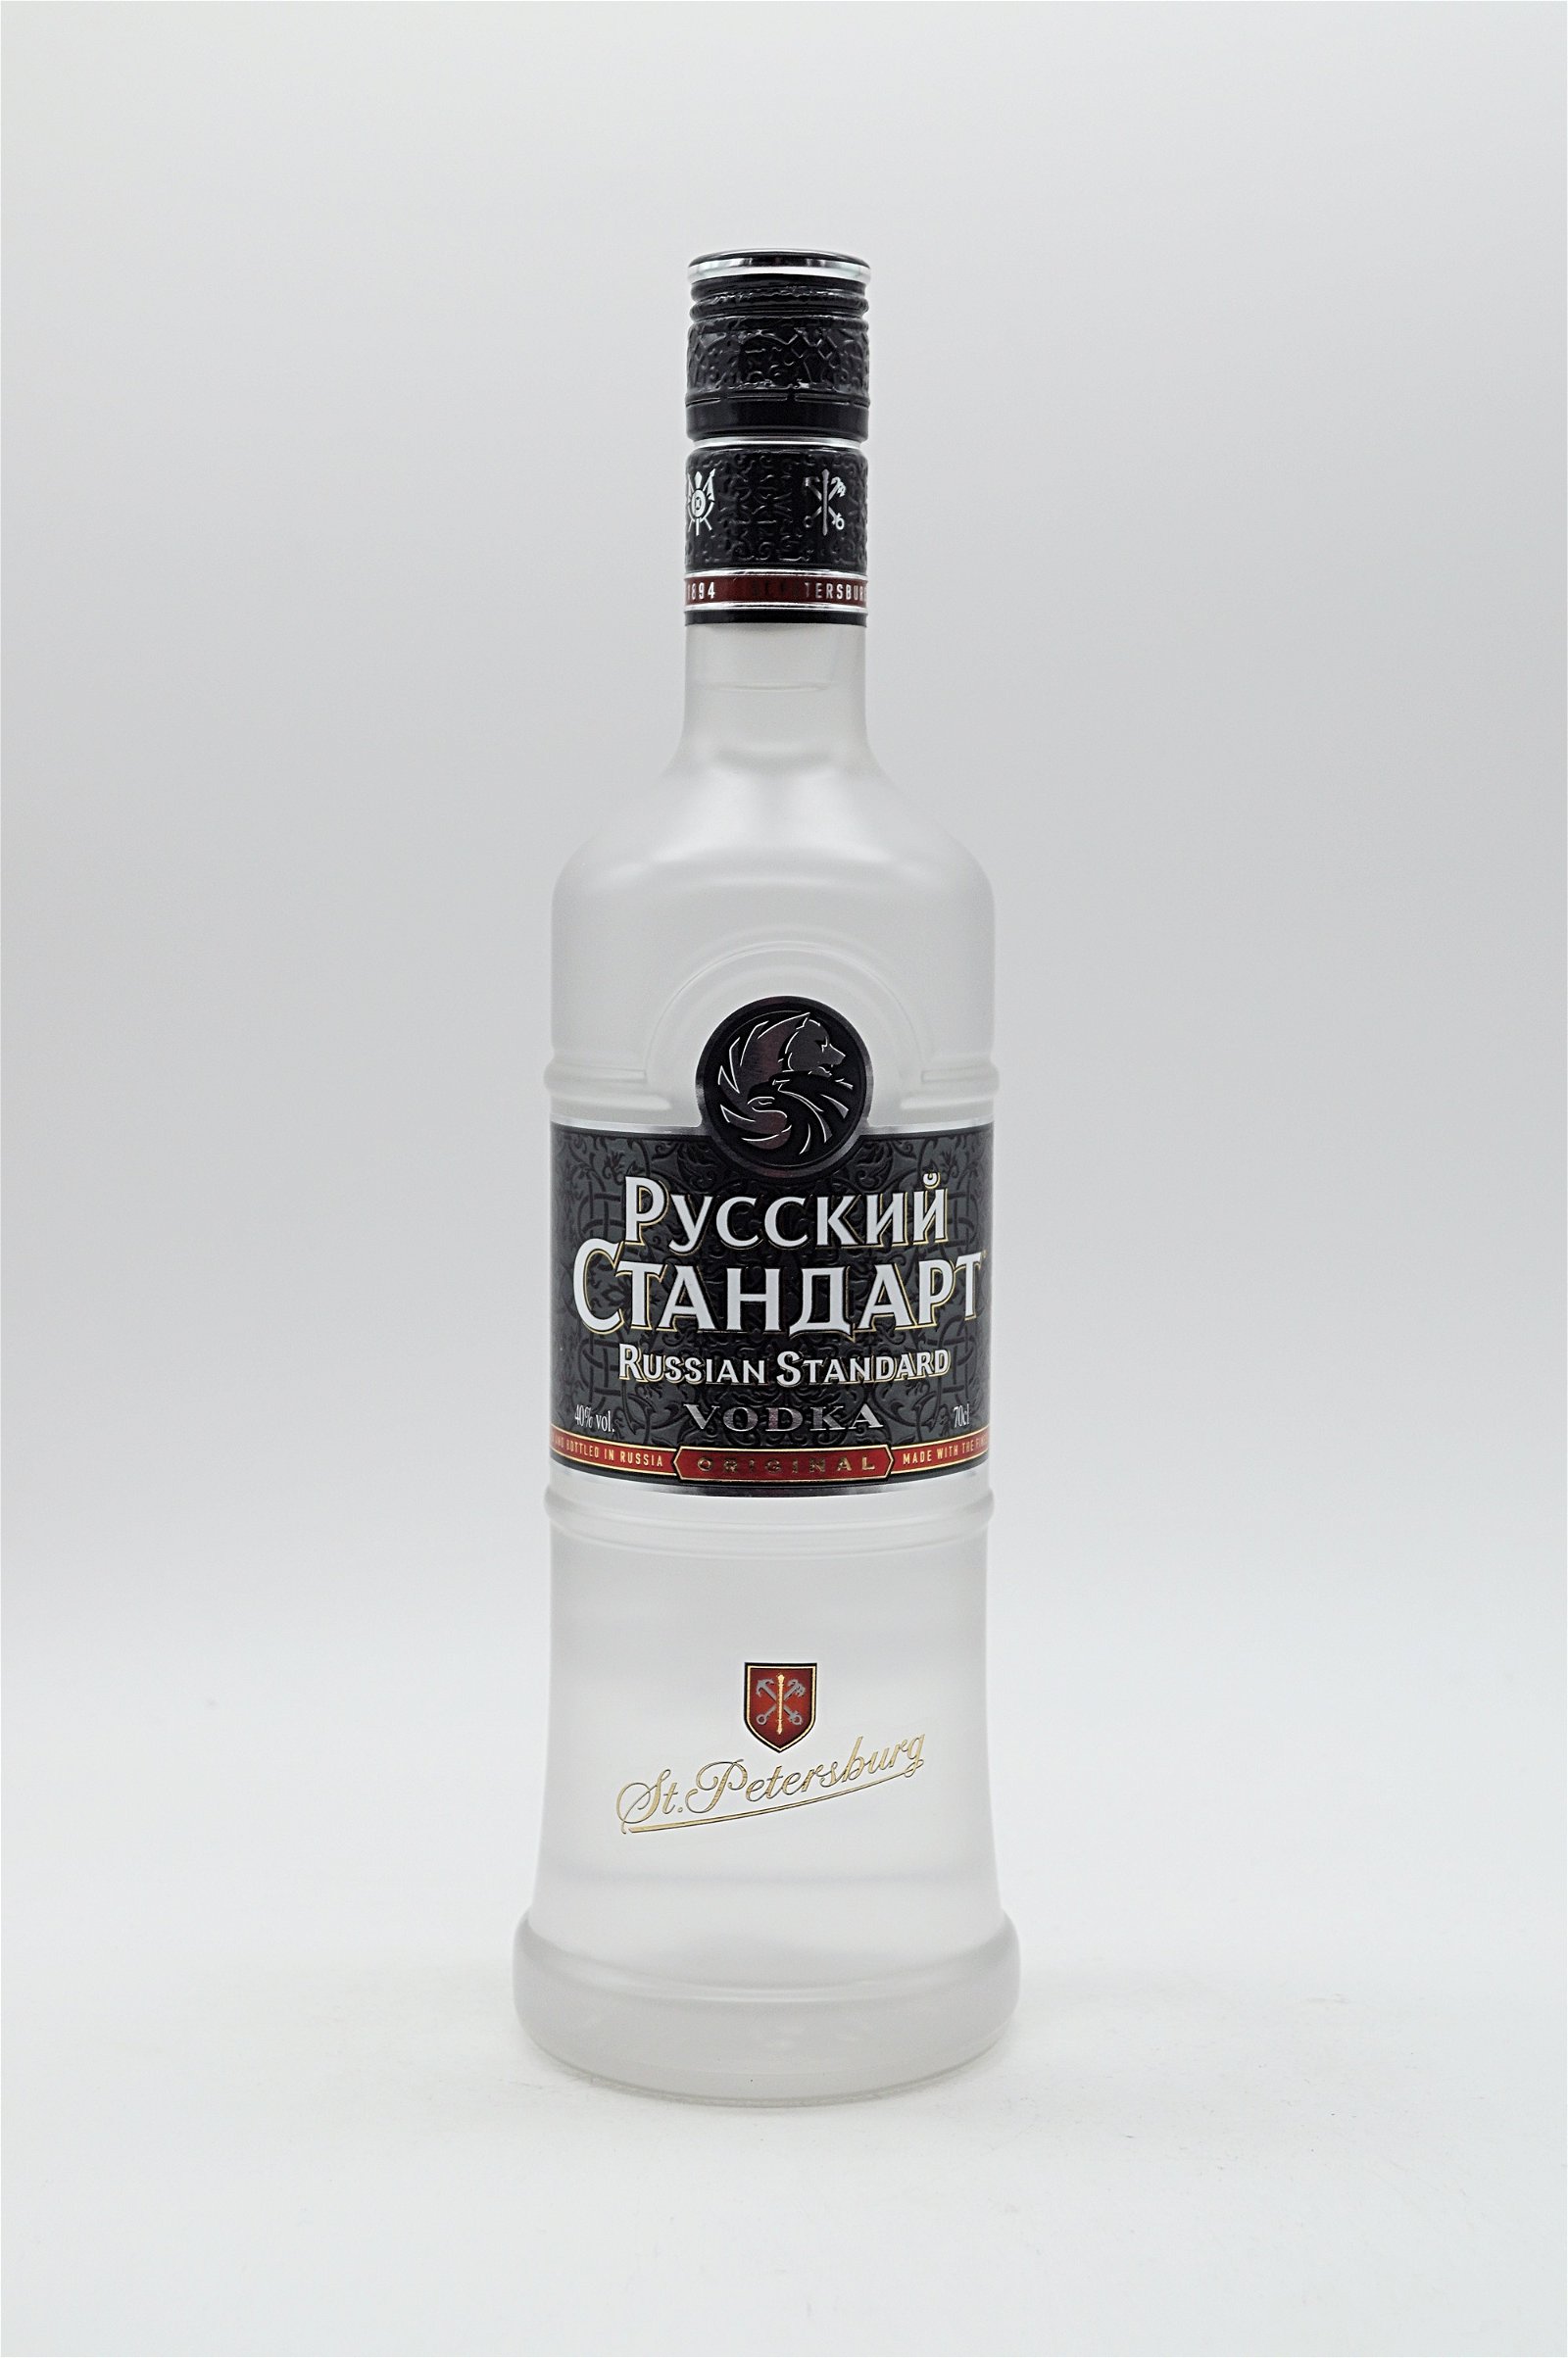 Pyccknn Ctahoapt Russian Standard Original Vodka